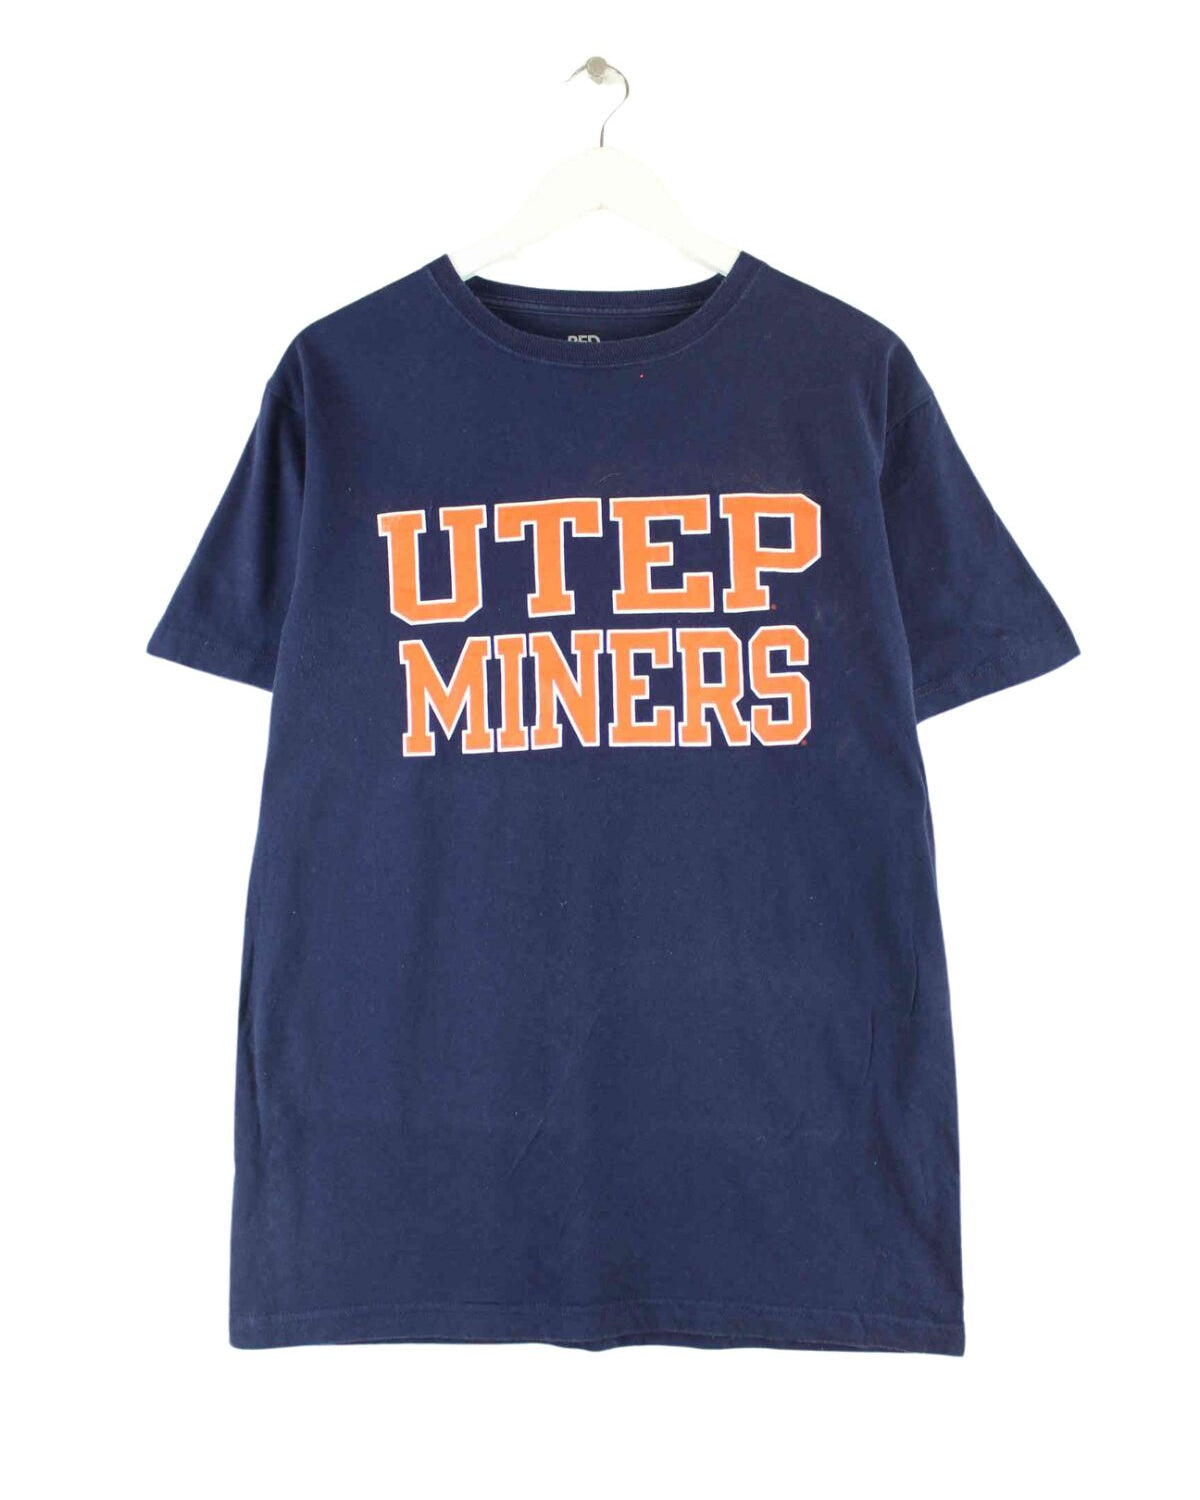 Vintage Utep Miners Print T-Shirt Blau M (front image)